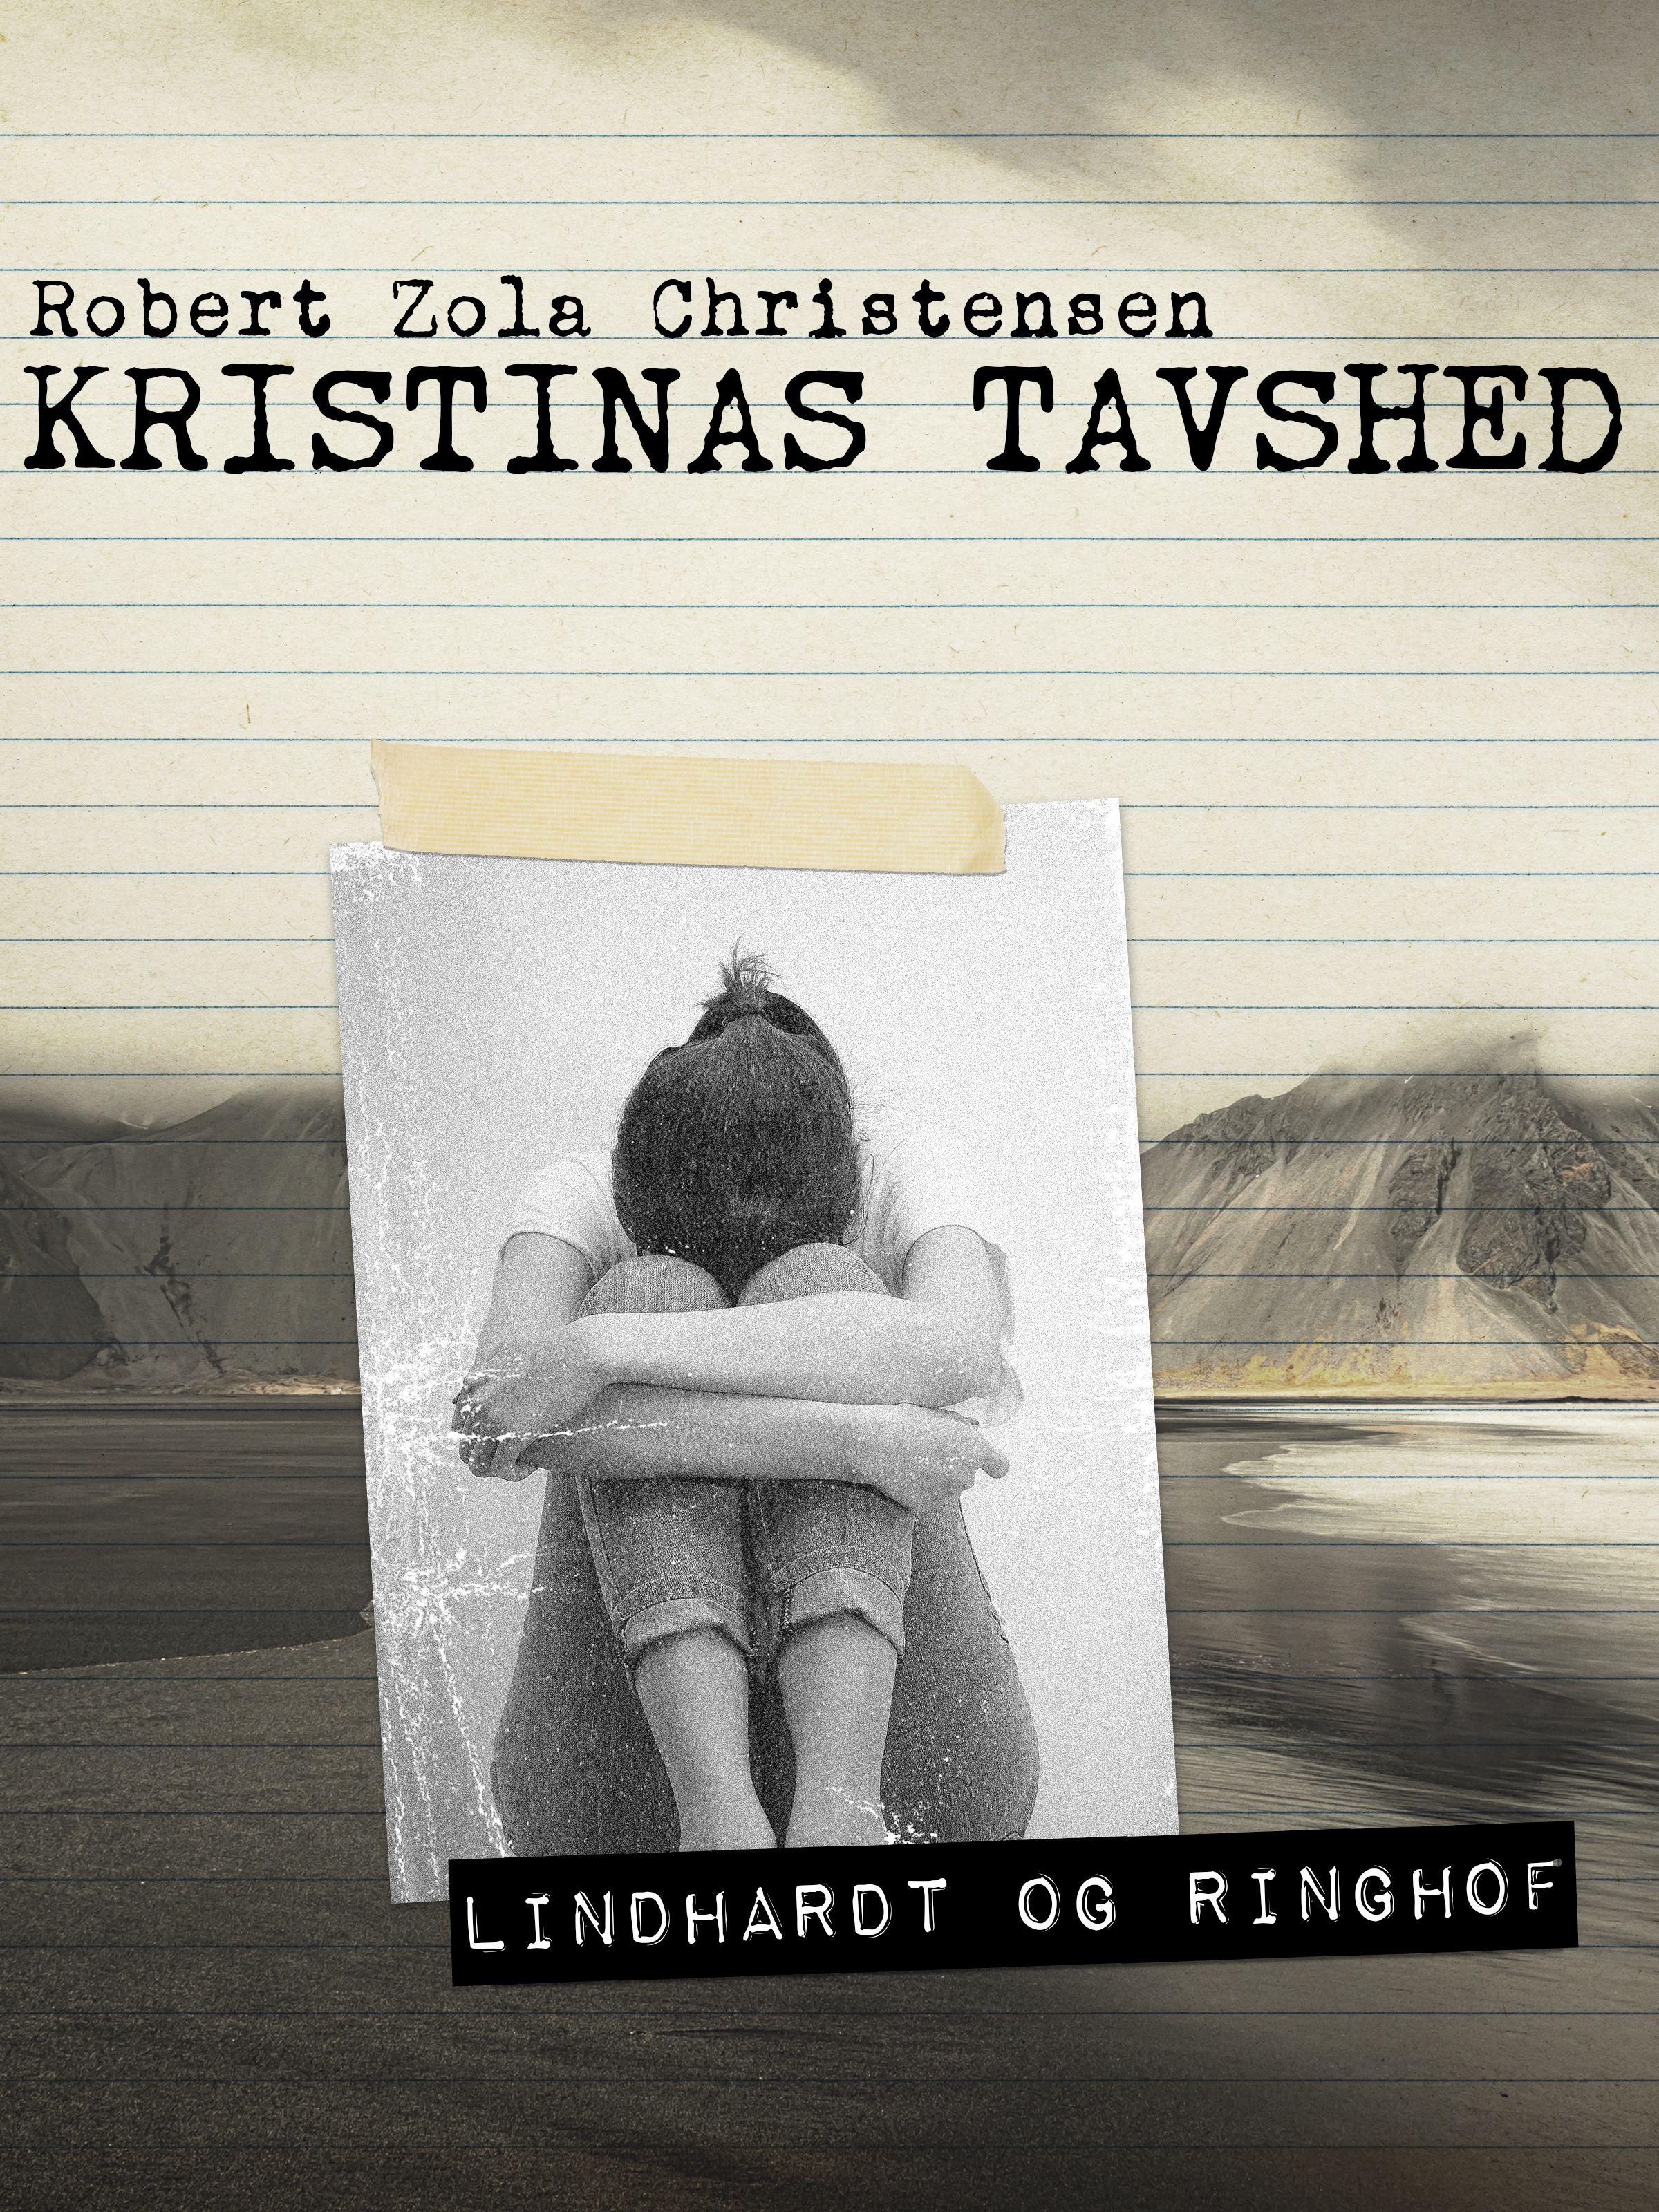 Kristinas tavshed, eBook by Robert Zola Christensen